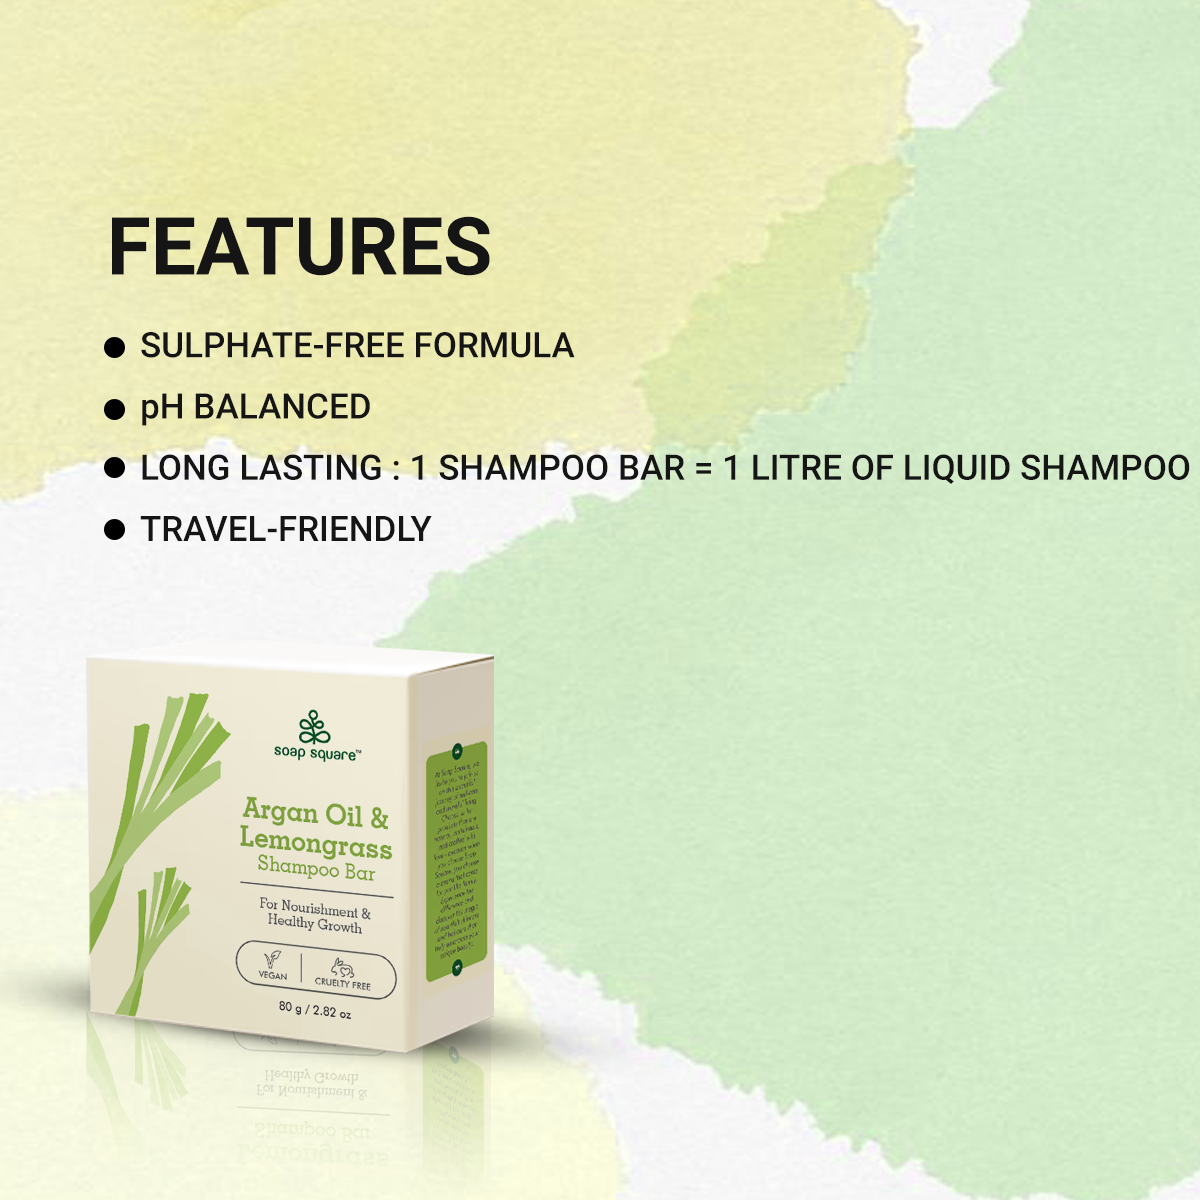 Argan Oil & Lemongrass Shampoo Bar (for nourishment & healthy growth)